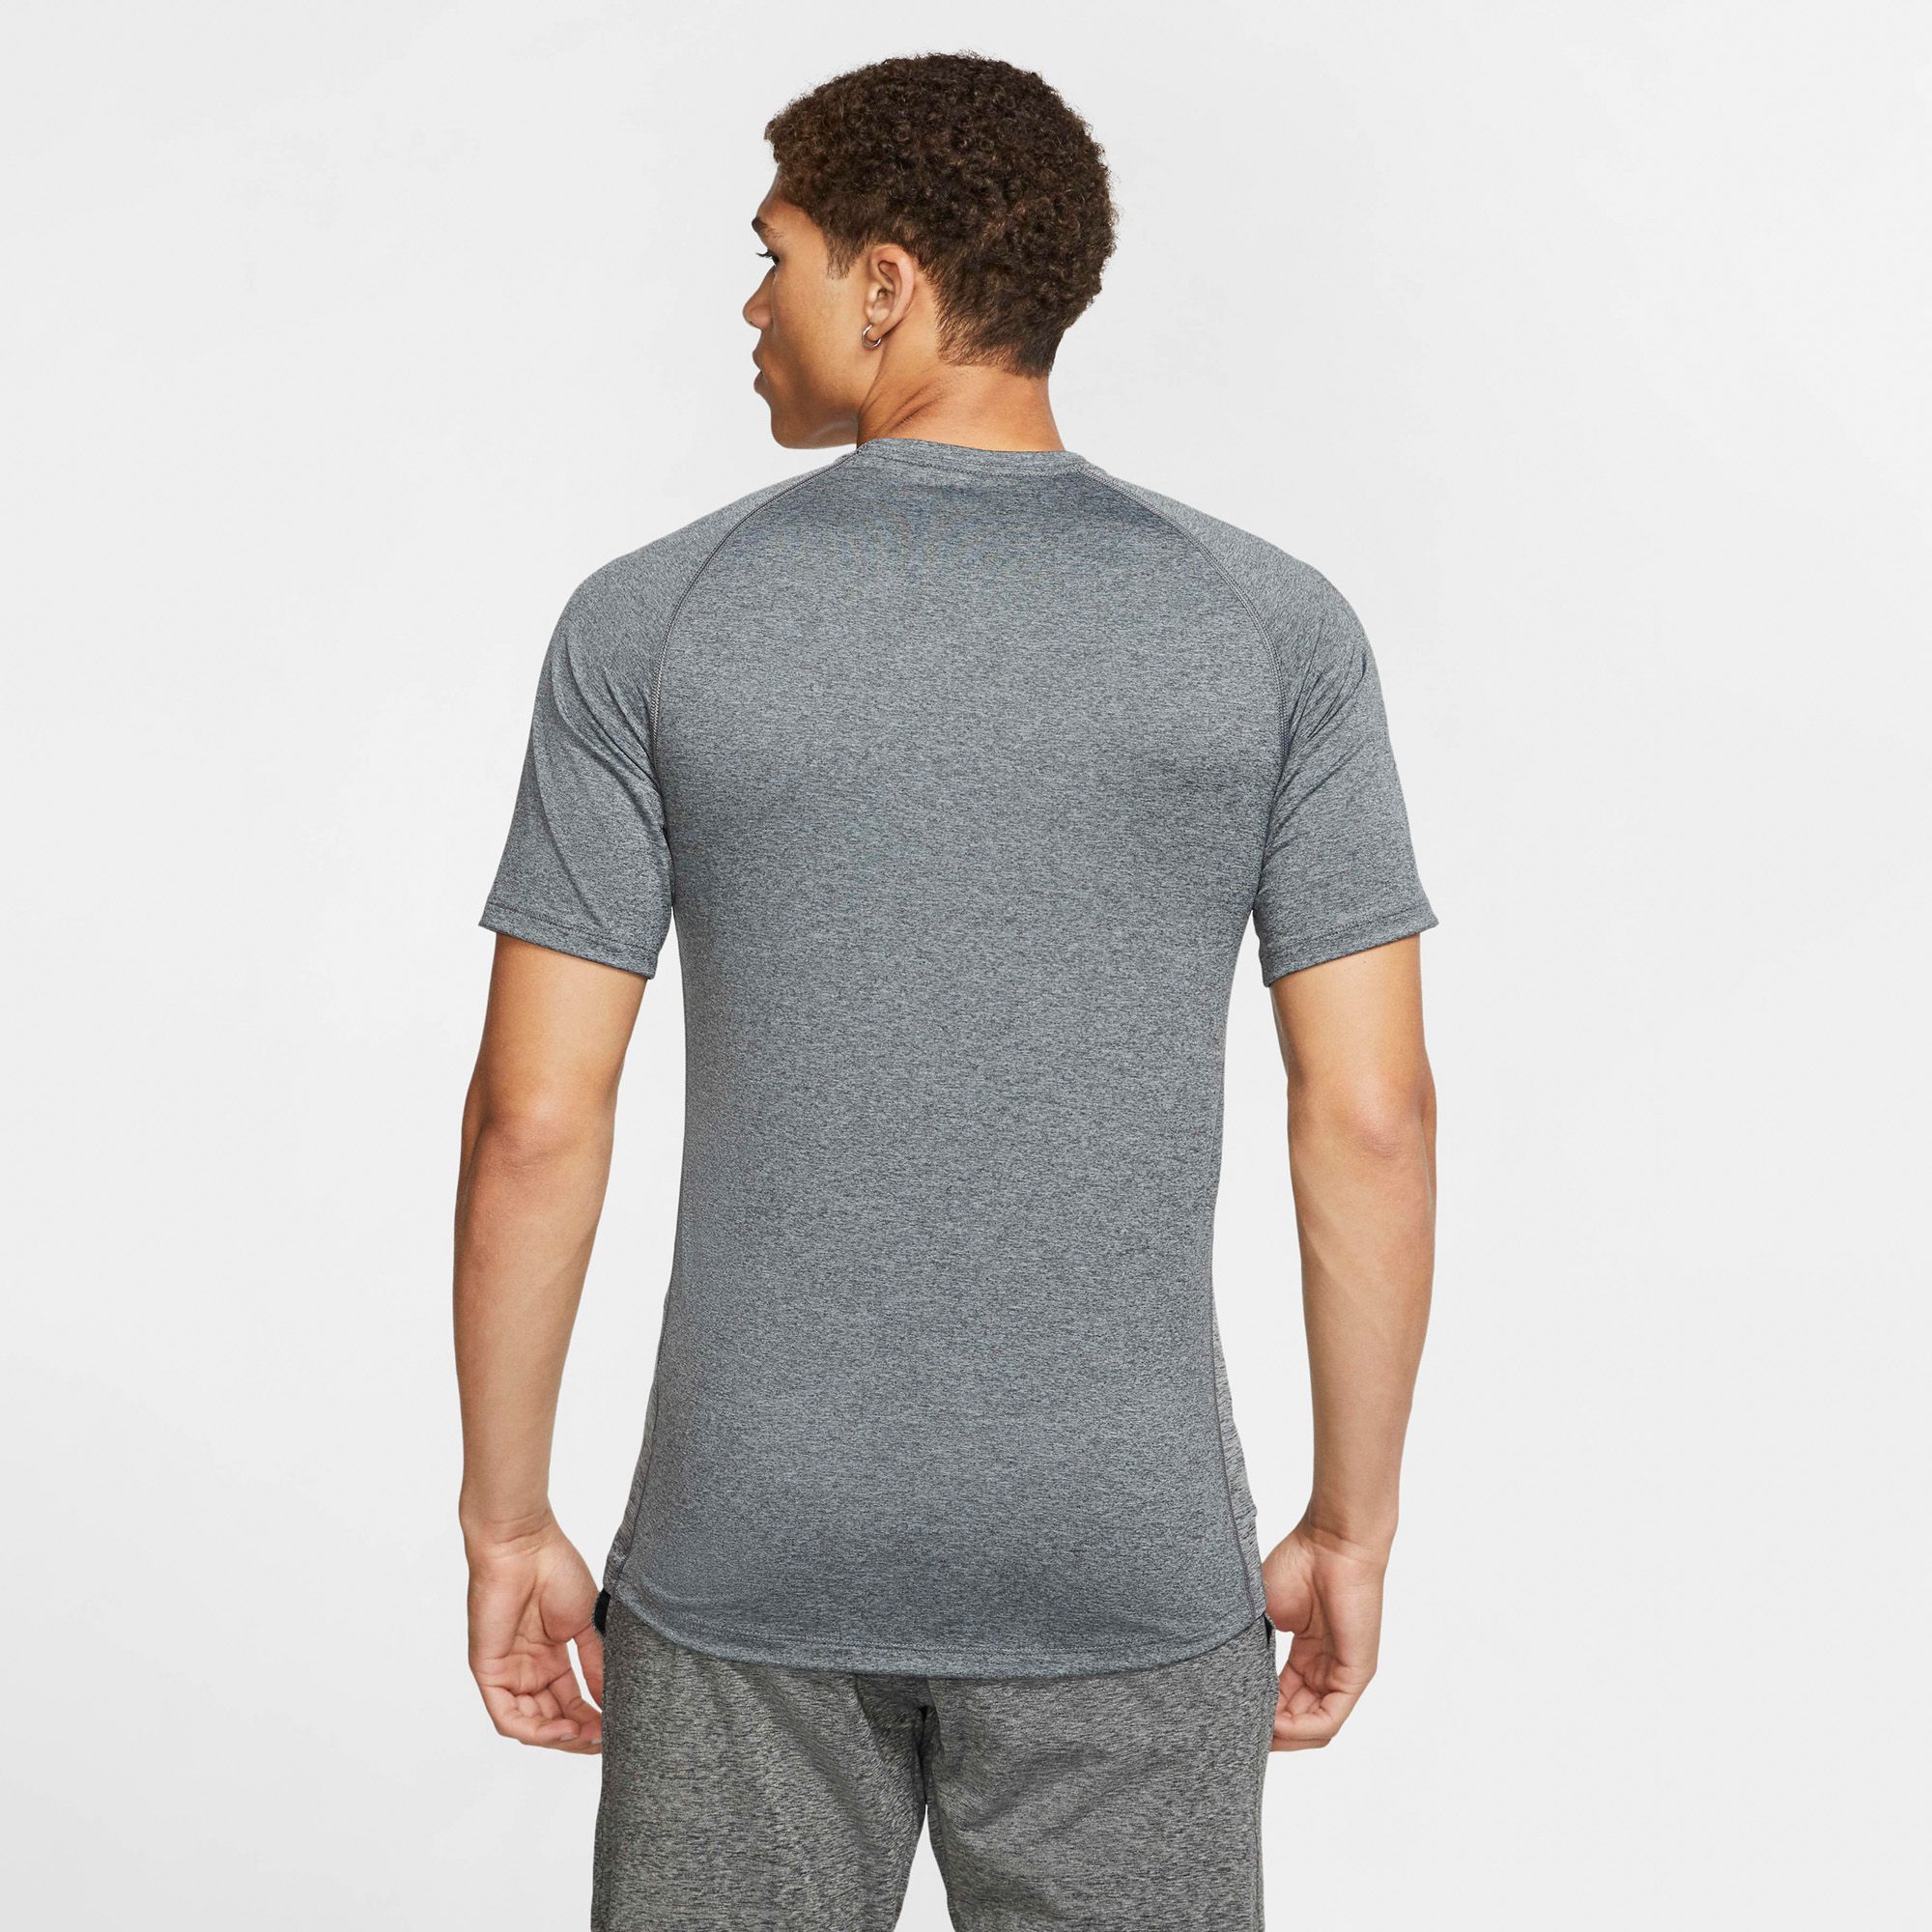  Nike Pro Short-Sleeve Top - Dark Smoke Grey 